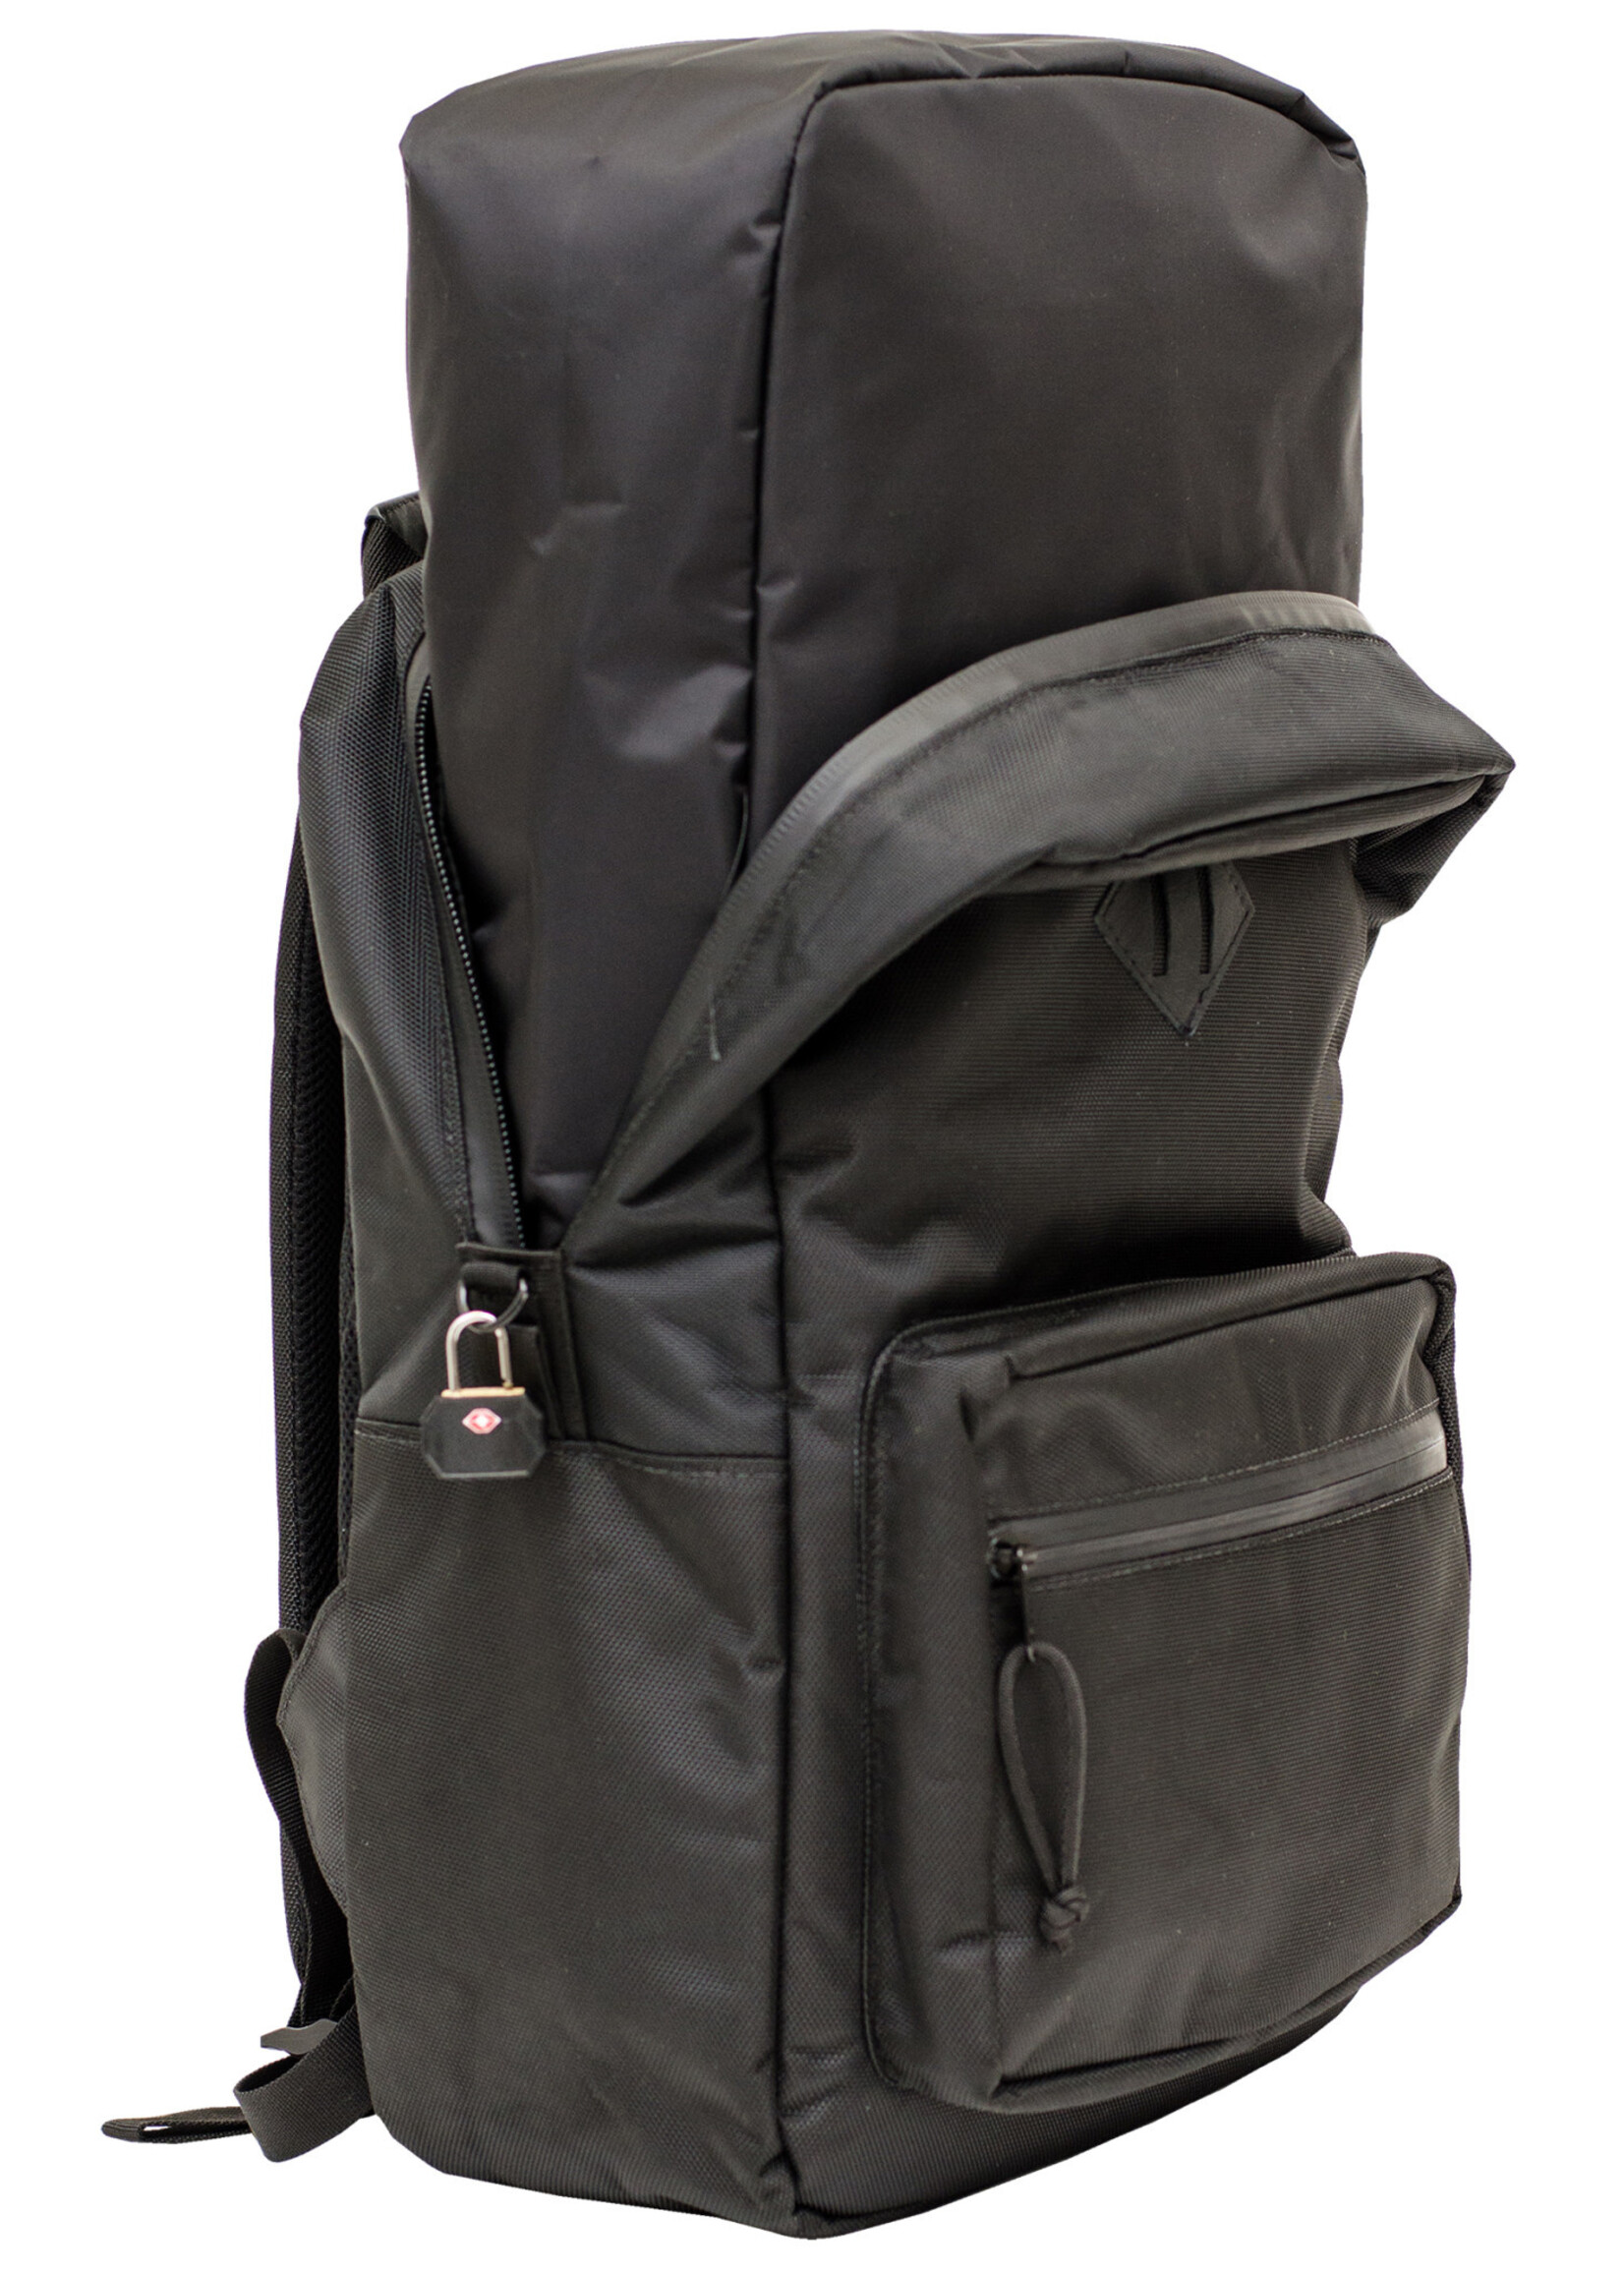 Abscent Abscent Tactical Ballistic Backpack w/ Insert - Black